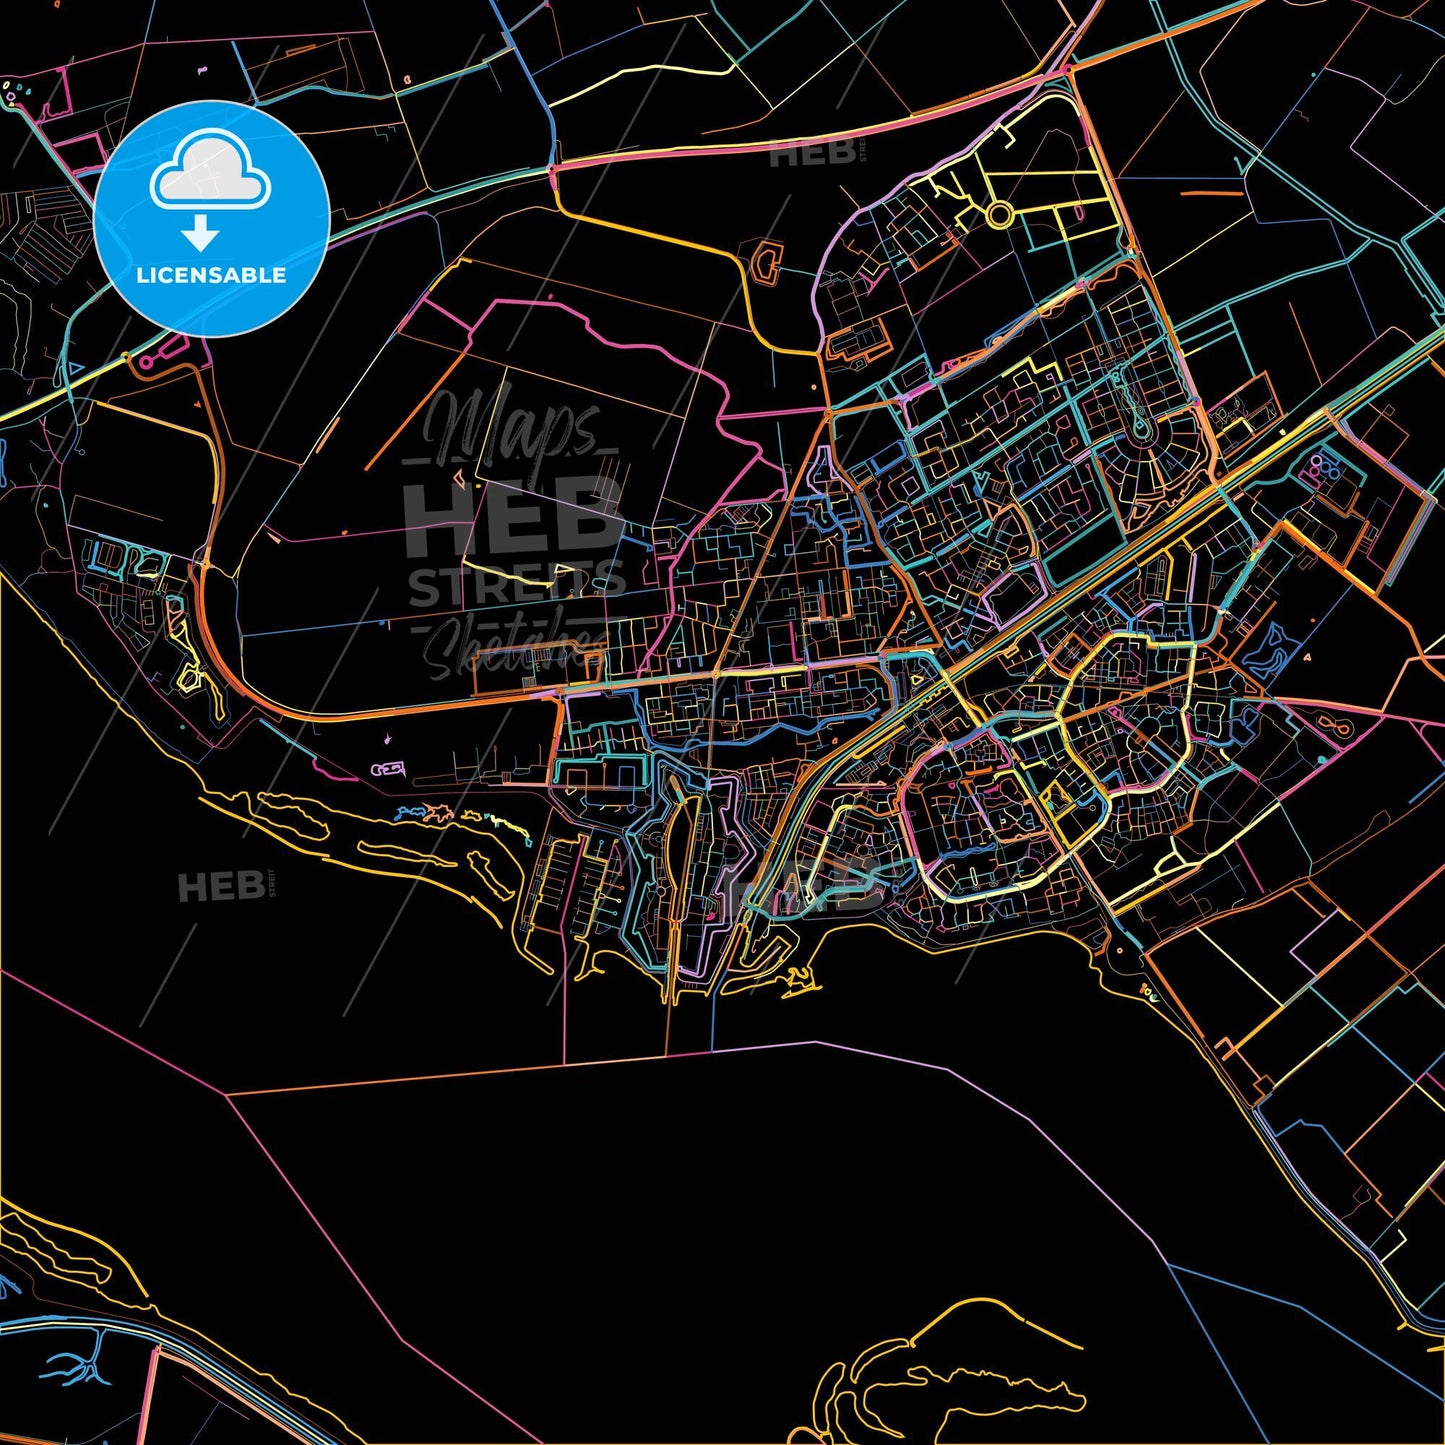 Hellevoetsluis, South Holland, Netherlands, colorful city map on black background